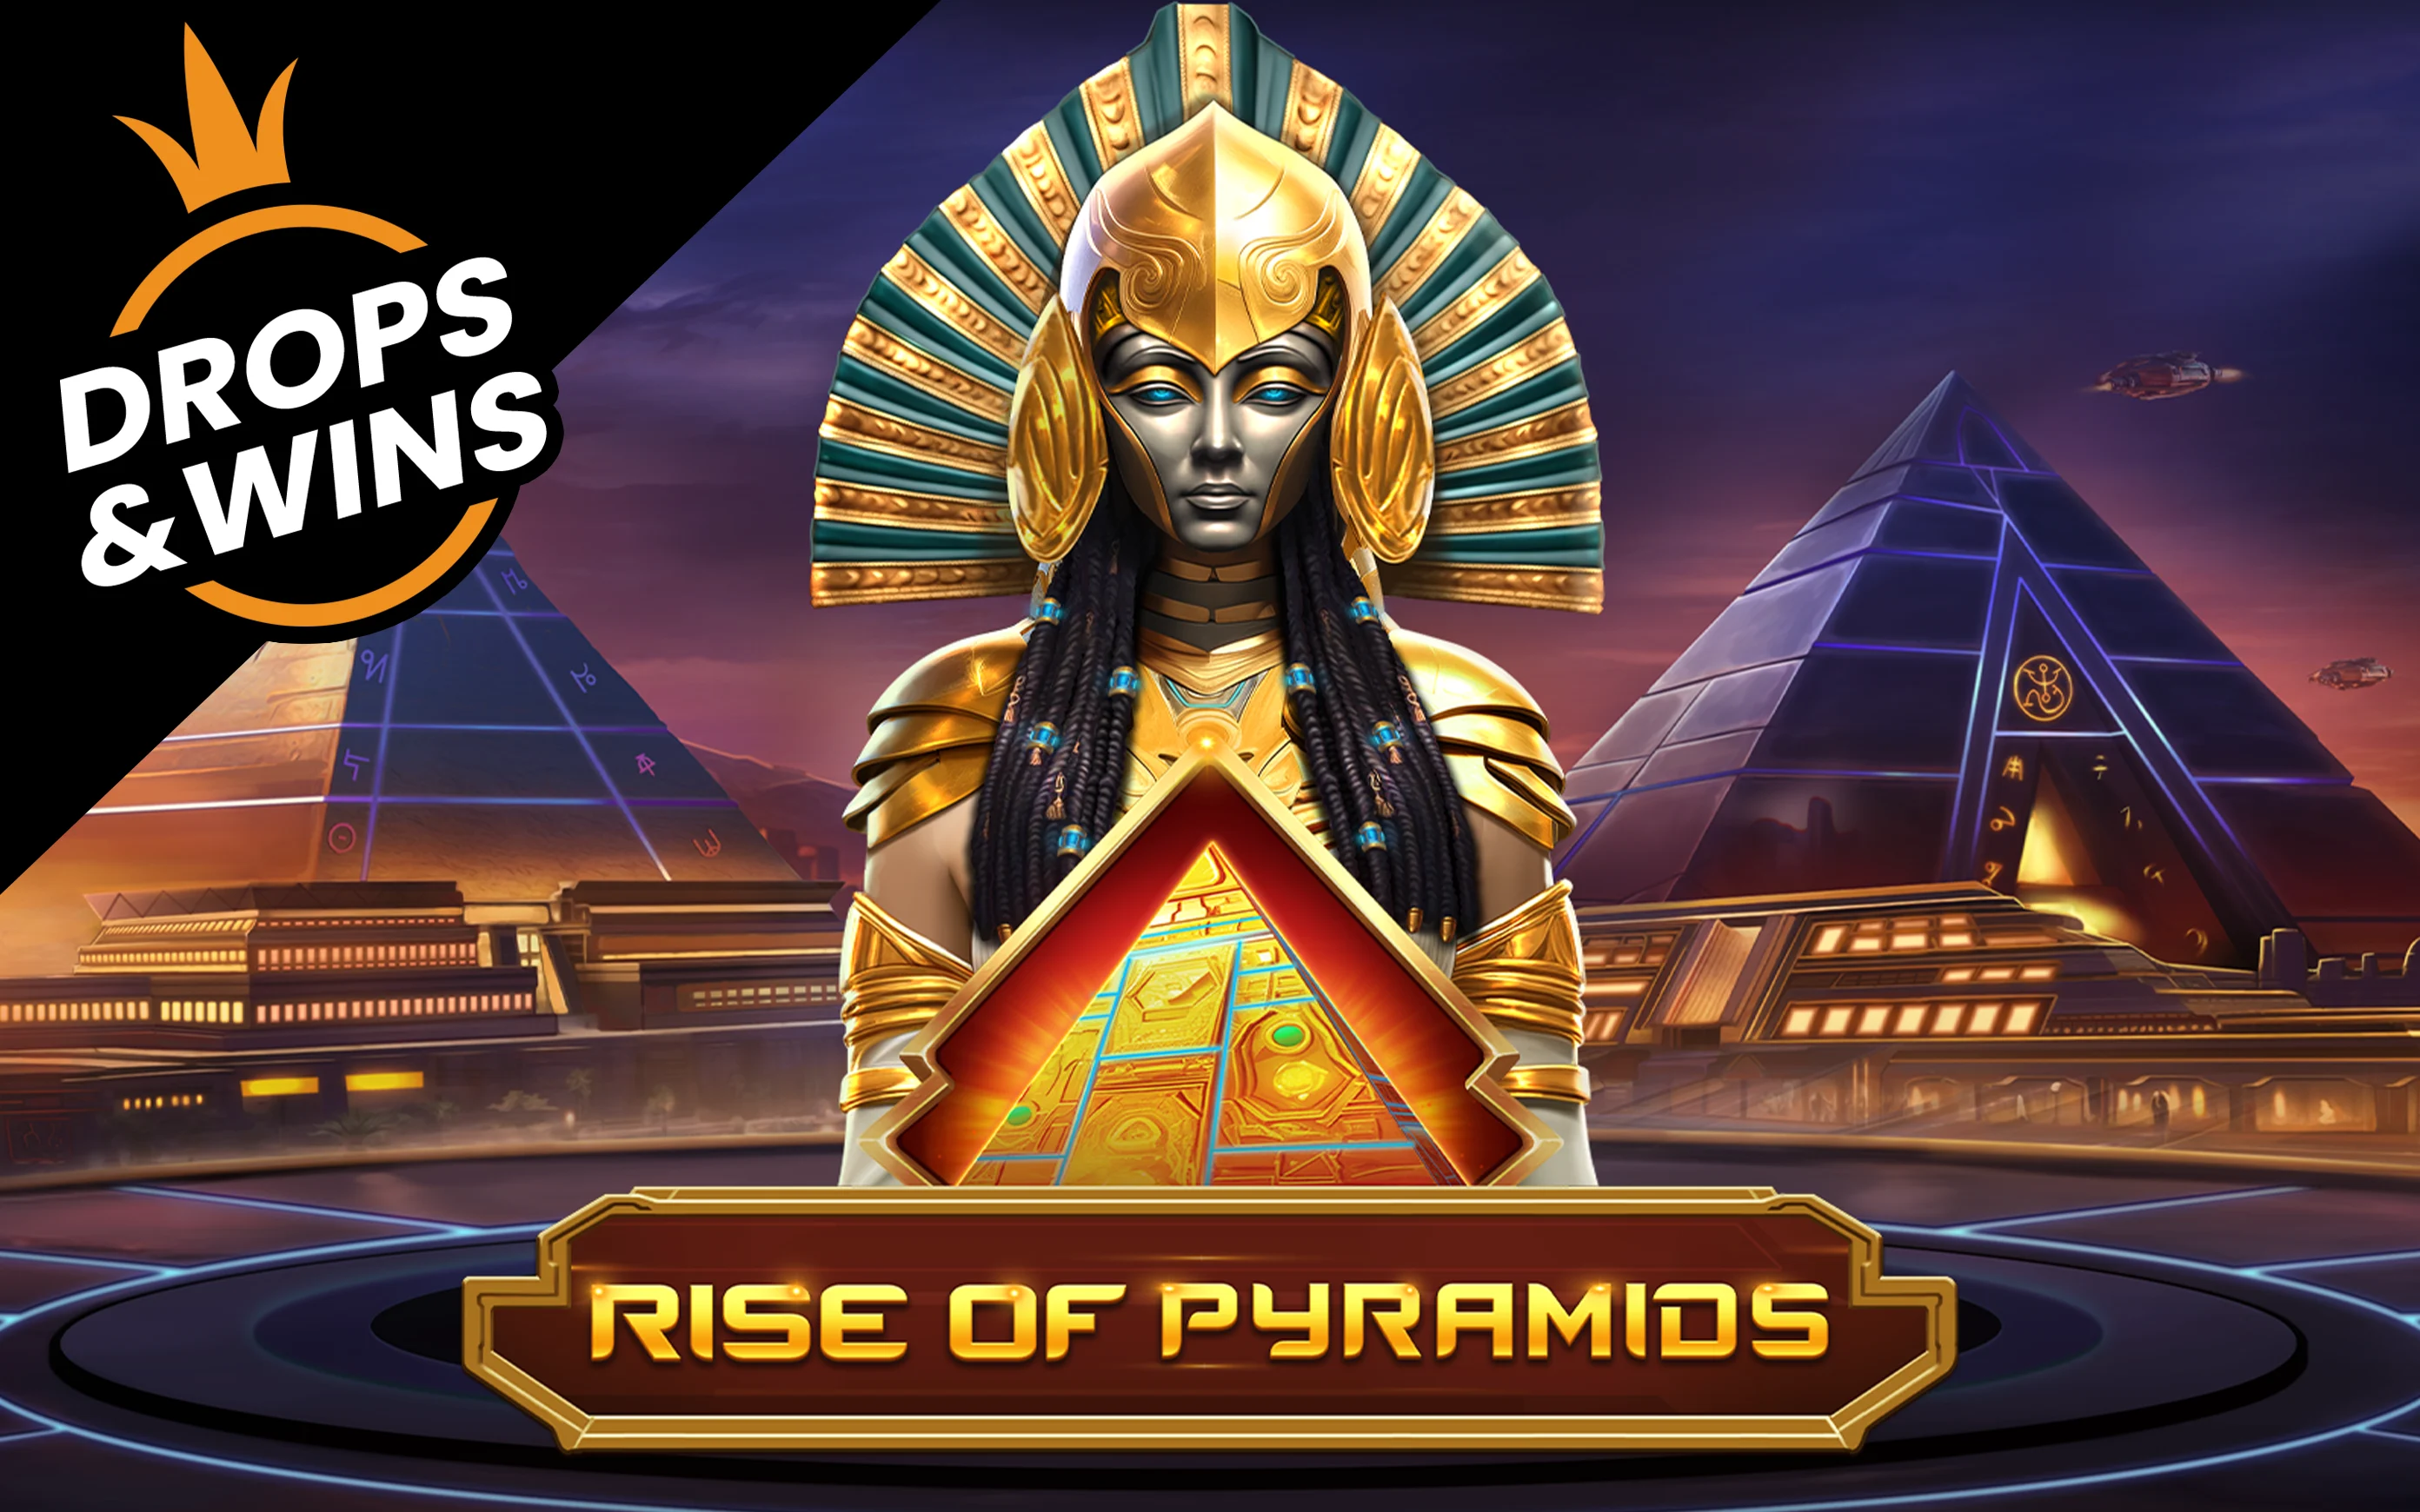 Joacă Rise of Pyramids în cazinoul online Starcasino.be